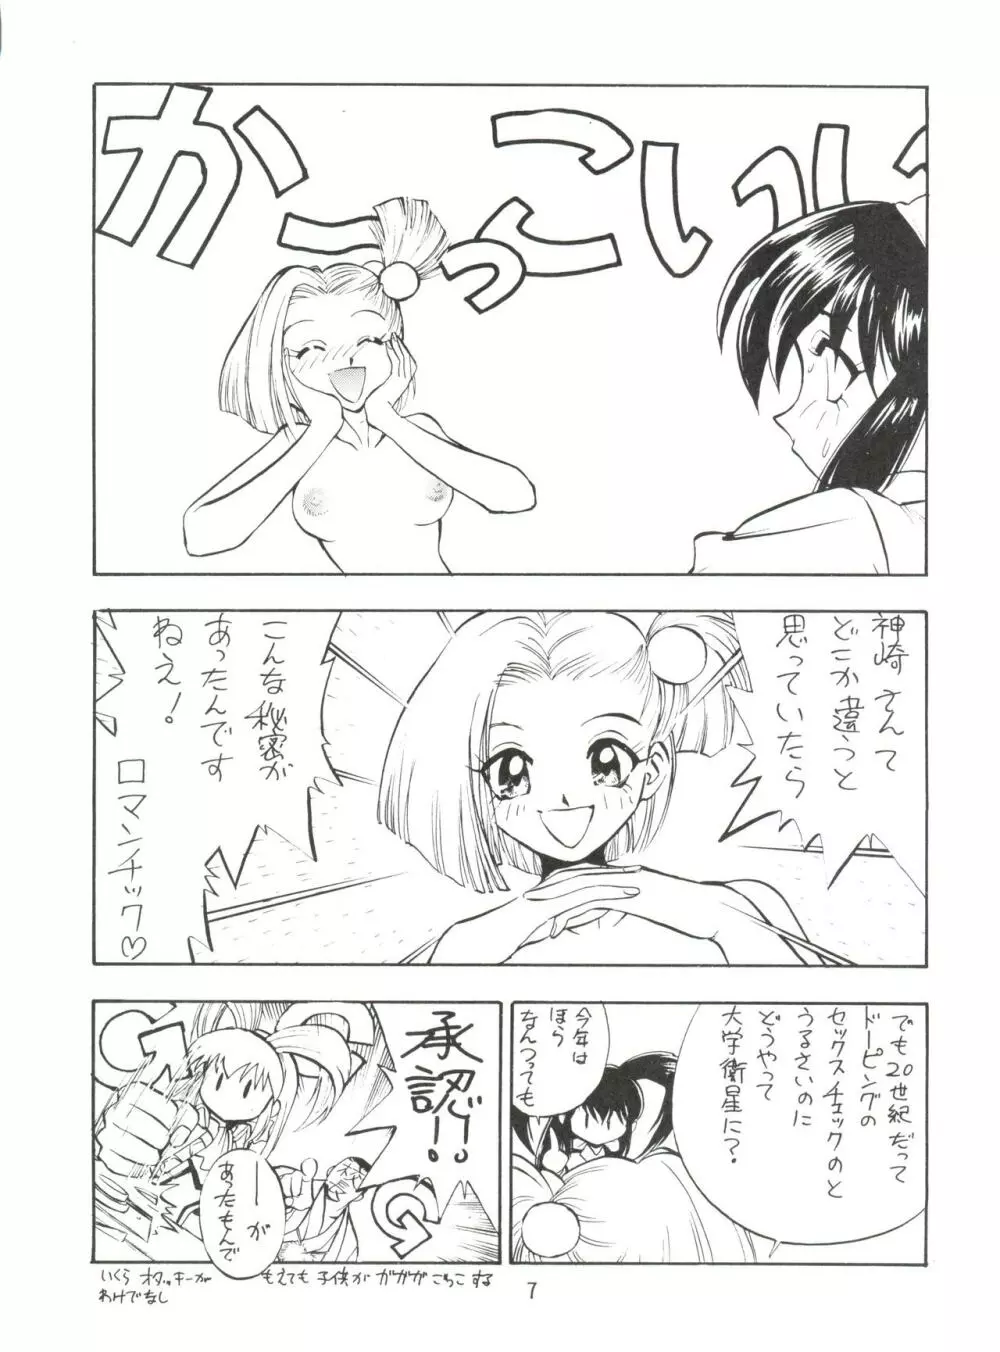 1997 WINTER 電撃犬王 8ページ